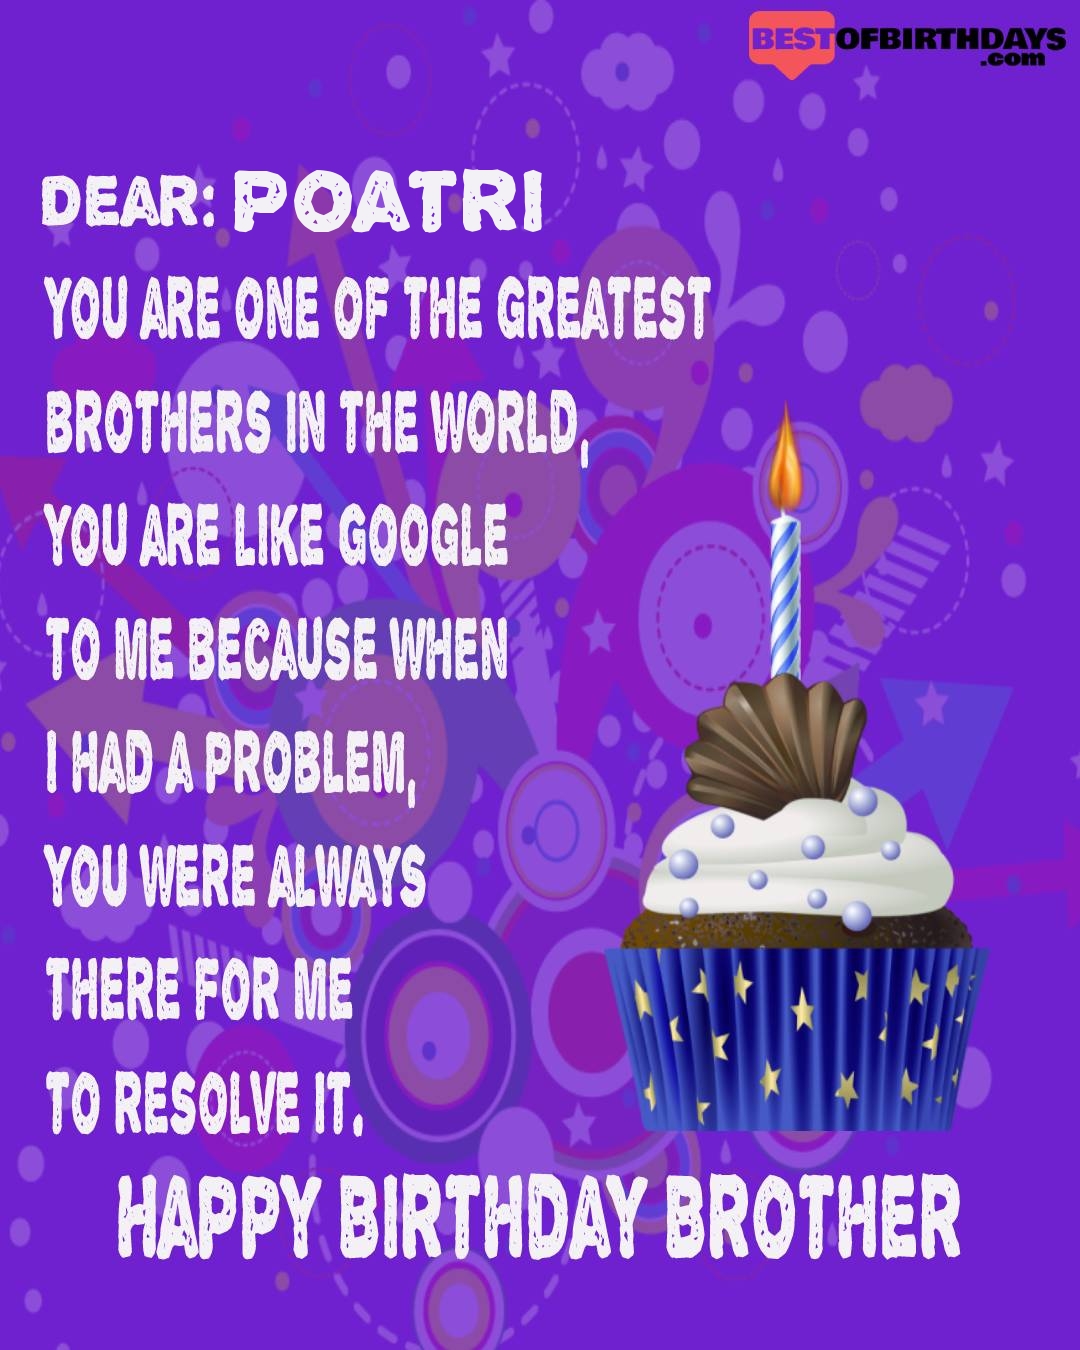 Happy birthday poatri bhai brother bro